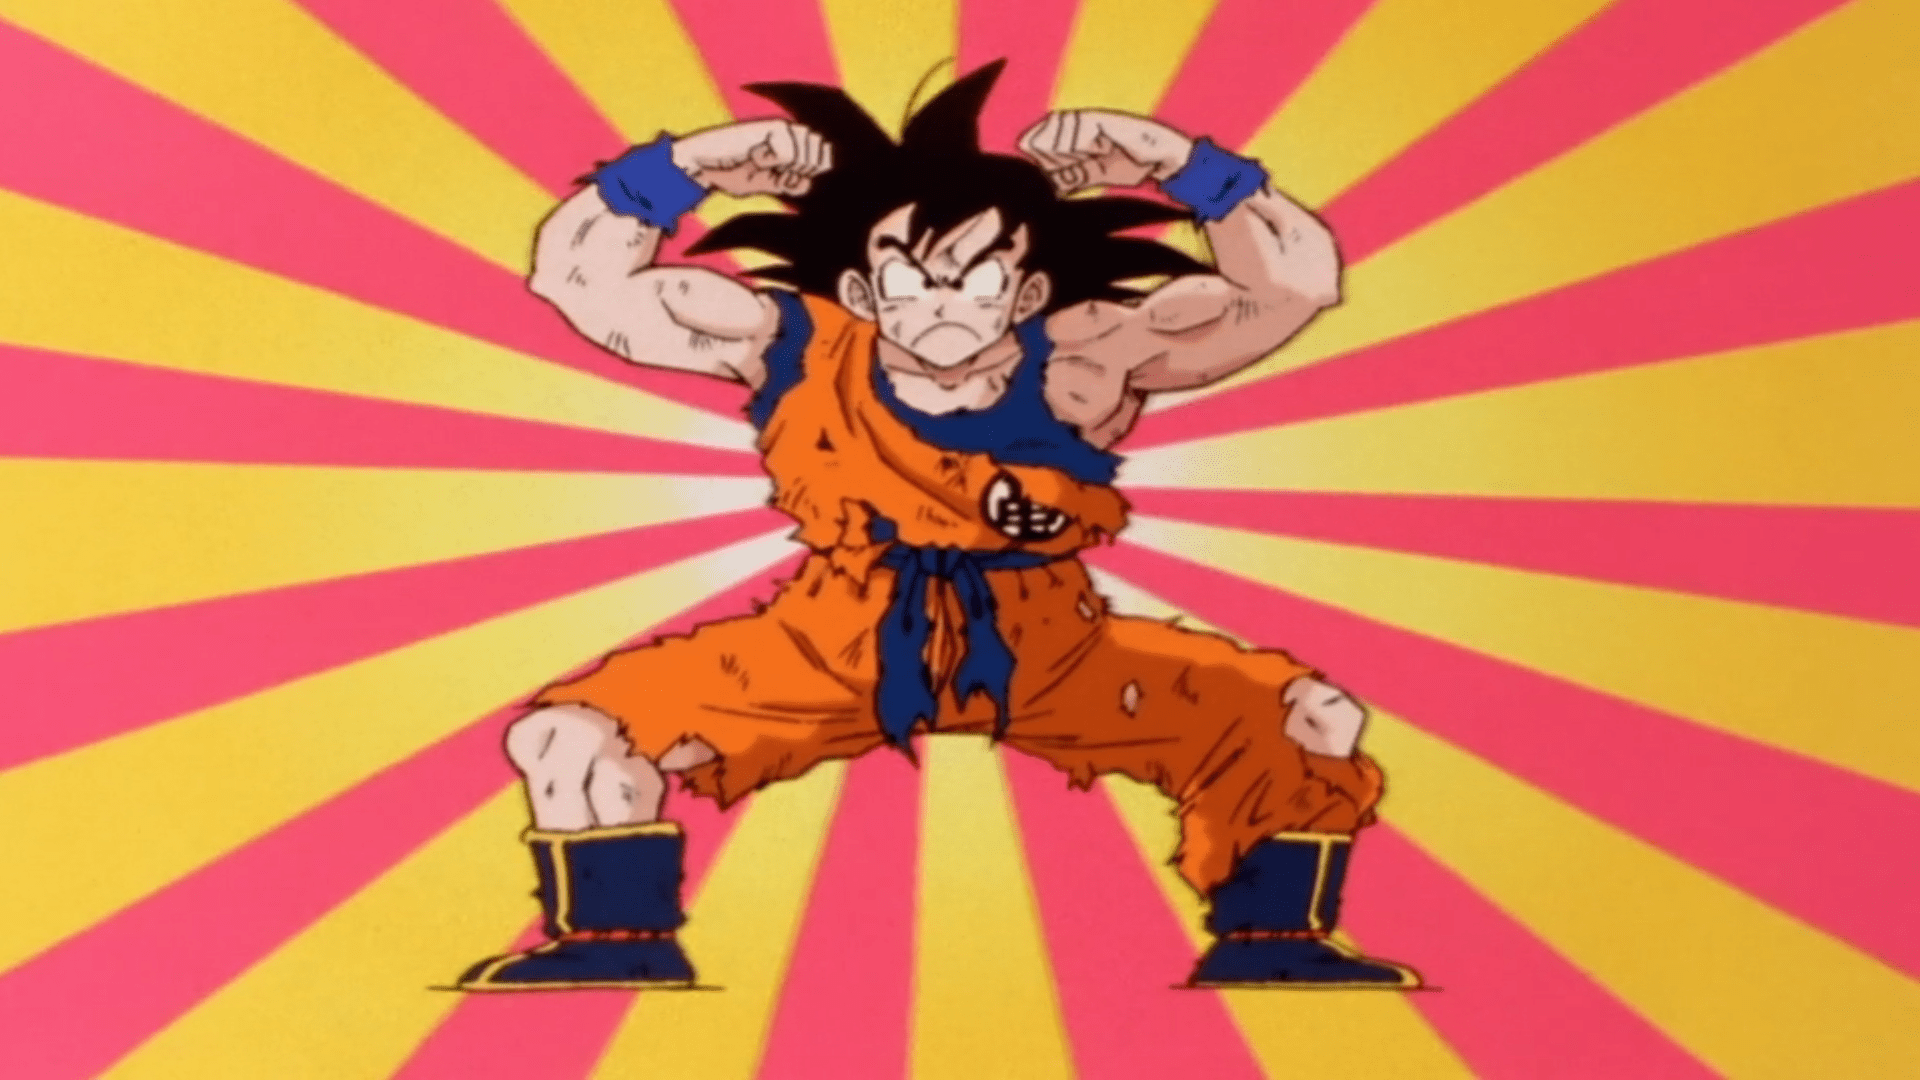 Funny Goku Wallpapers Top Free Funny Goku Backgrounds Wallpaperaccess 